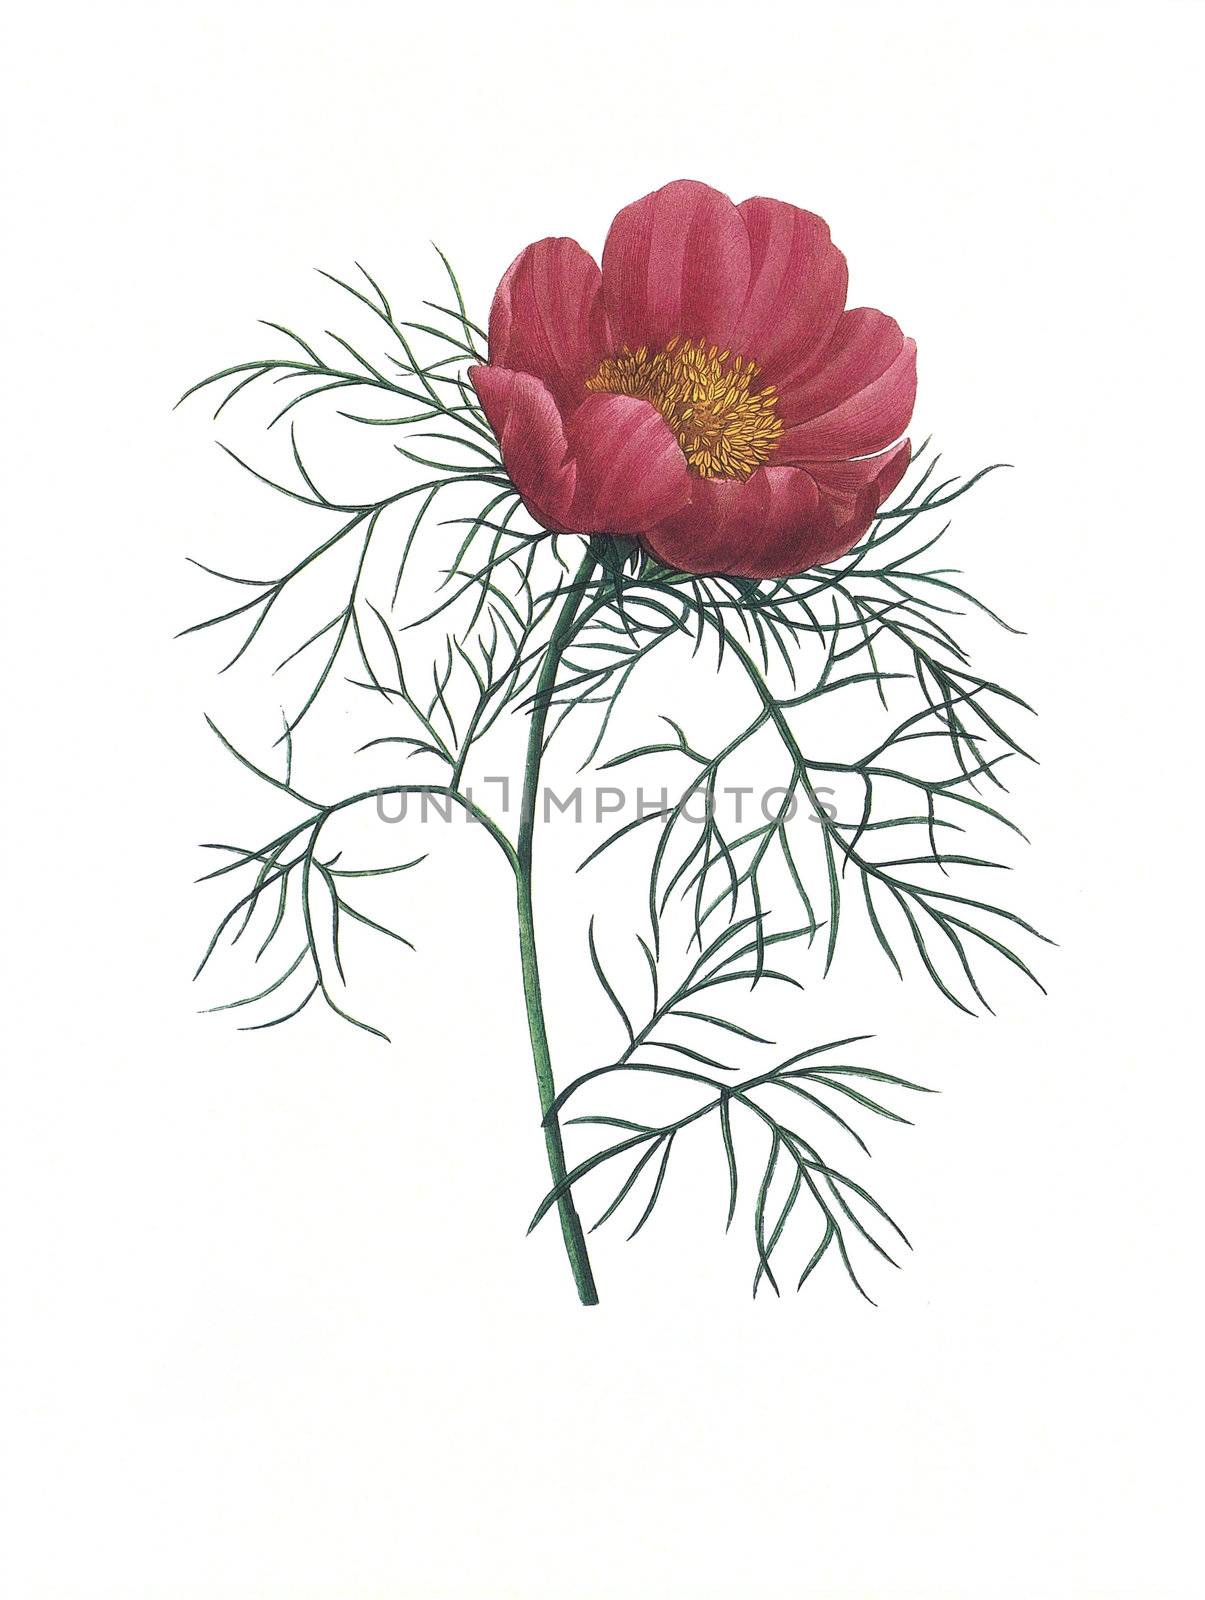 flower antique illustration peonia by matteobragaglio